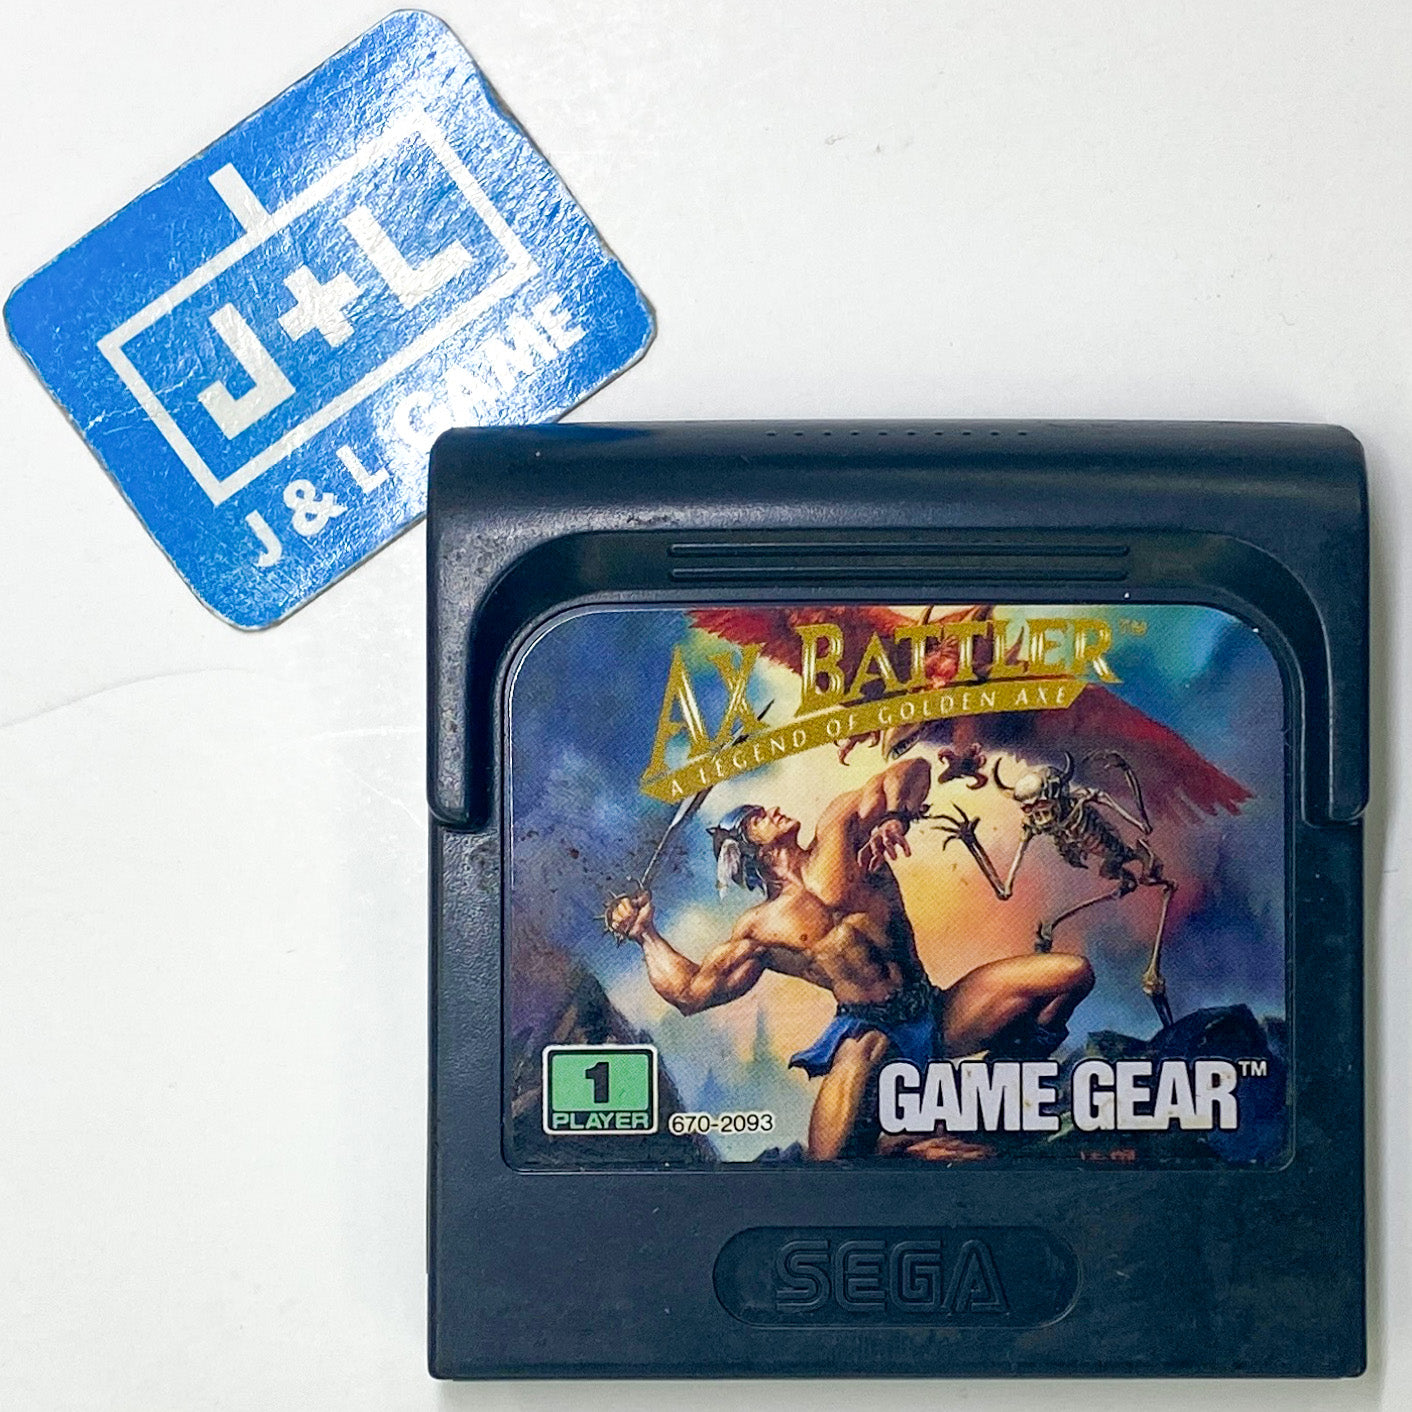 Ax Battler: A Legend of Golden Axe - SEGA GameGear [Pre-Owned] Video Games Sega   